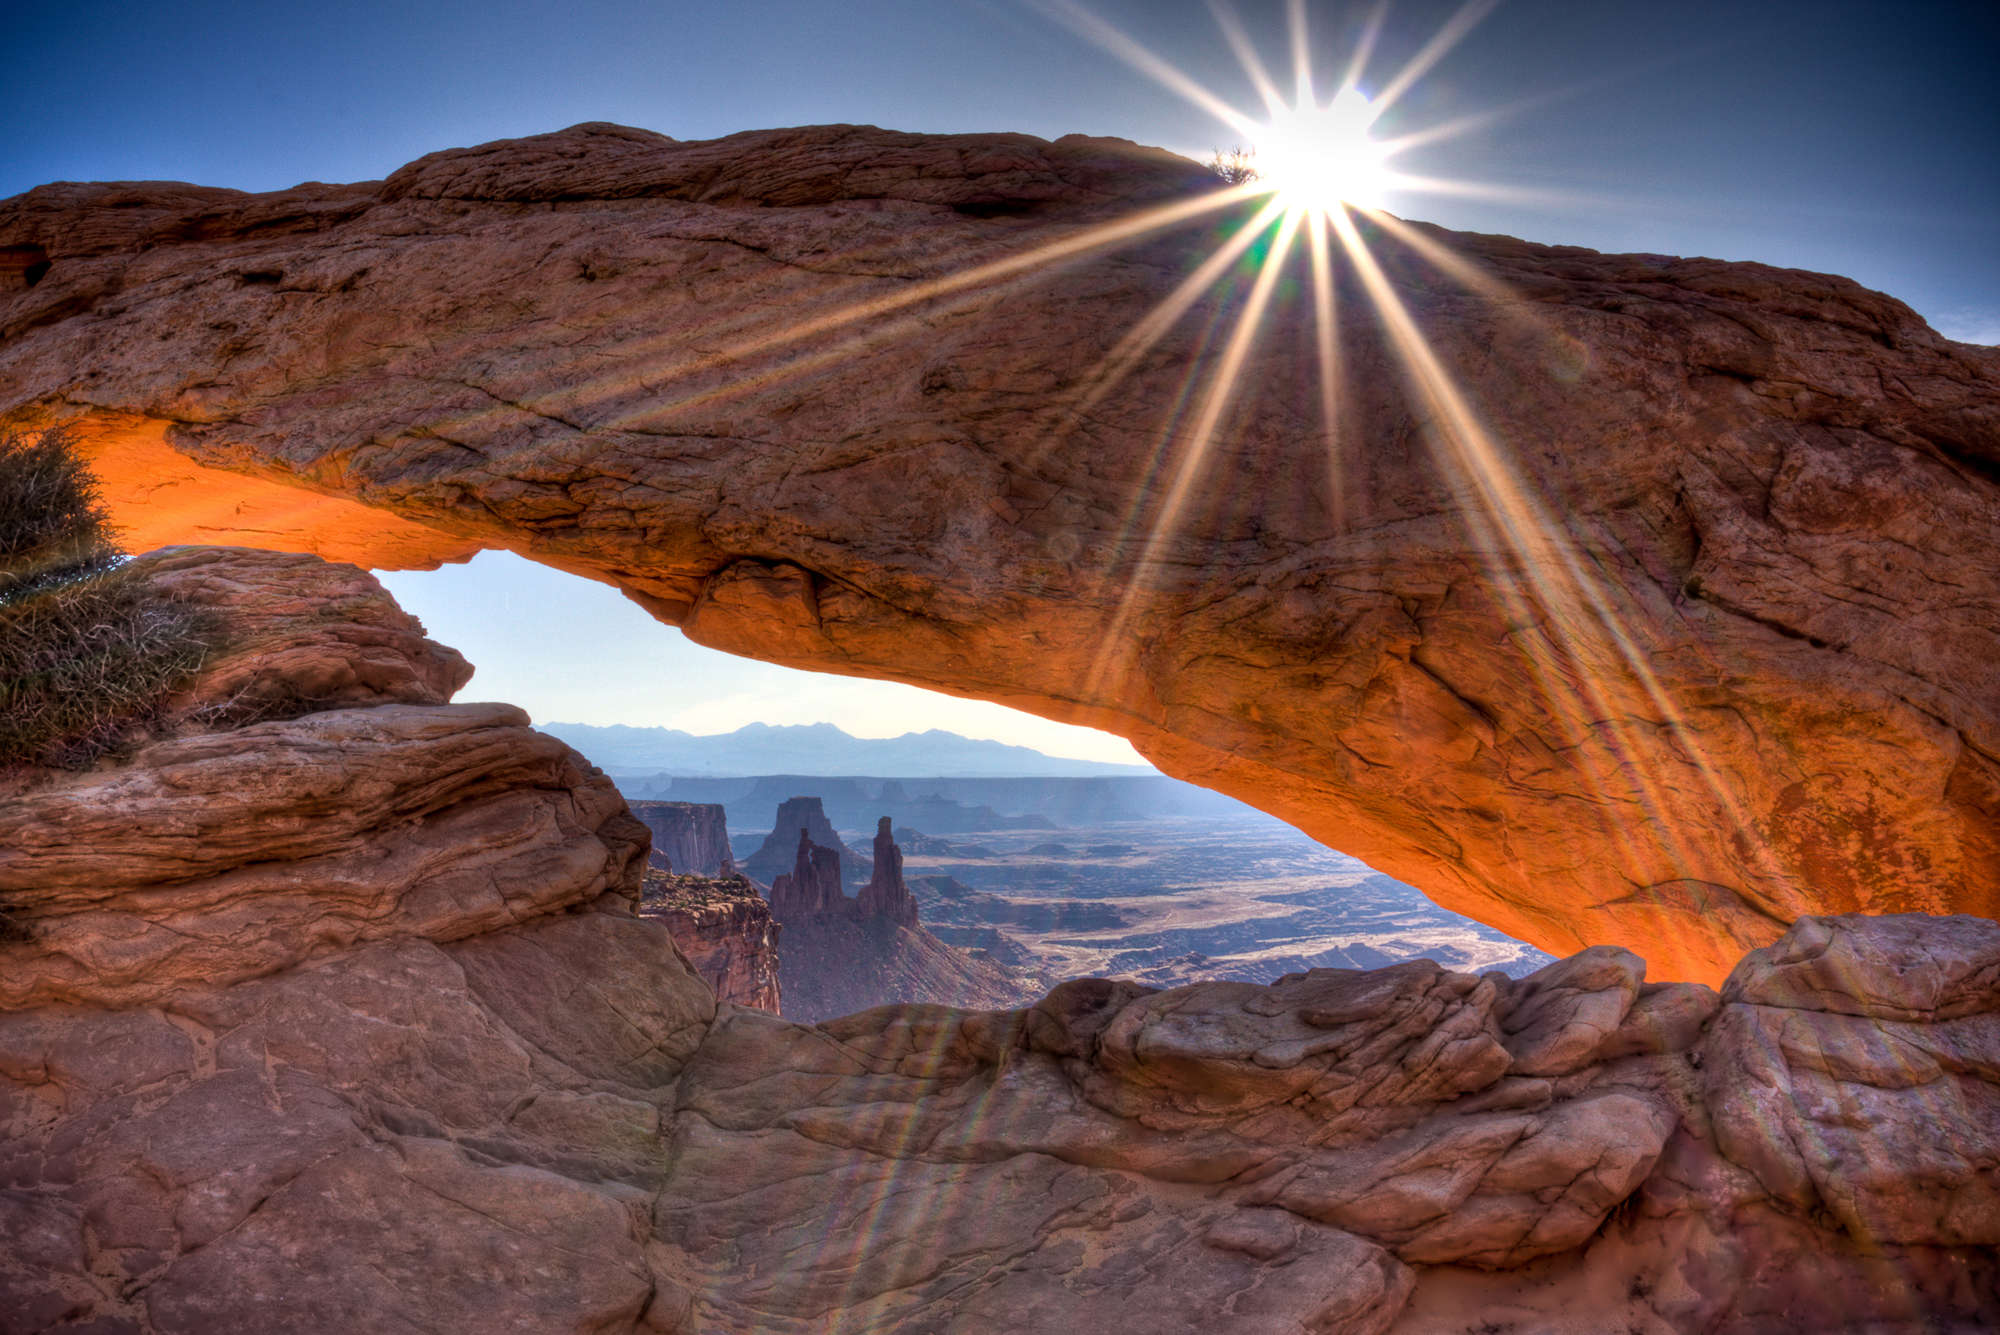             Fototapete Canyon mit Mesa Arch – Strukturiertes Vlies
        